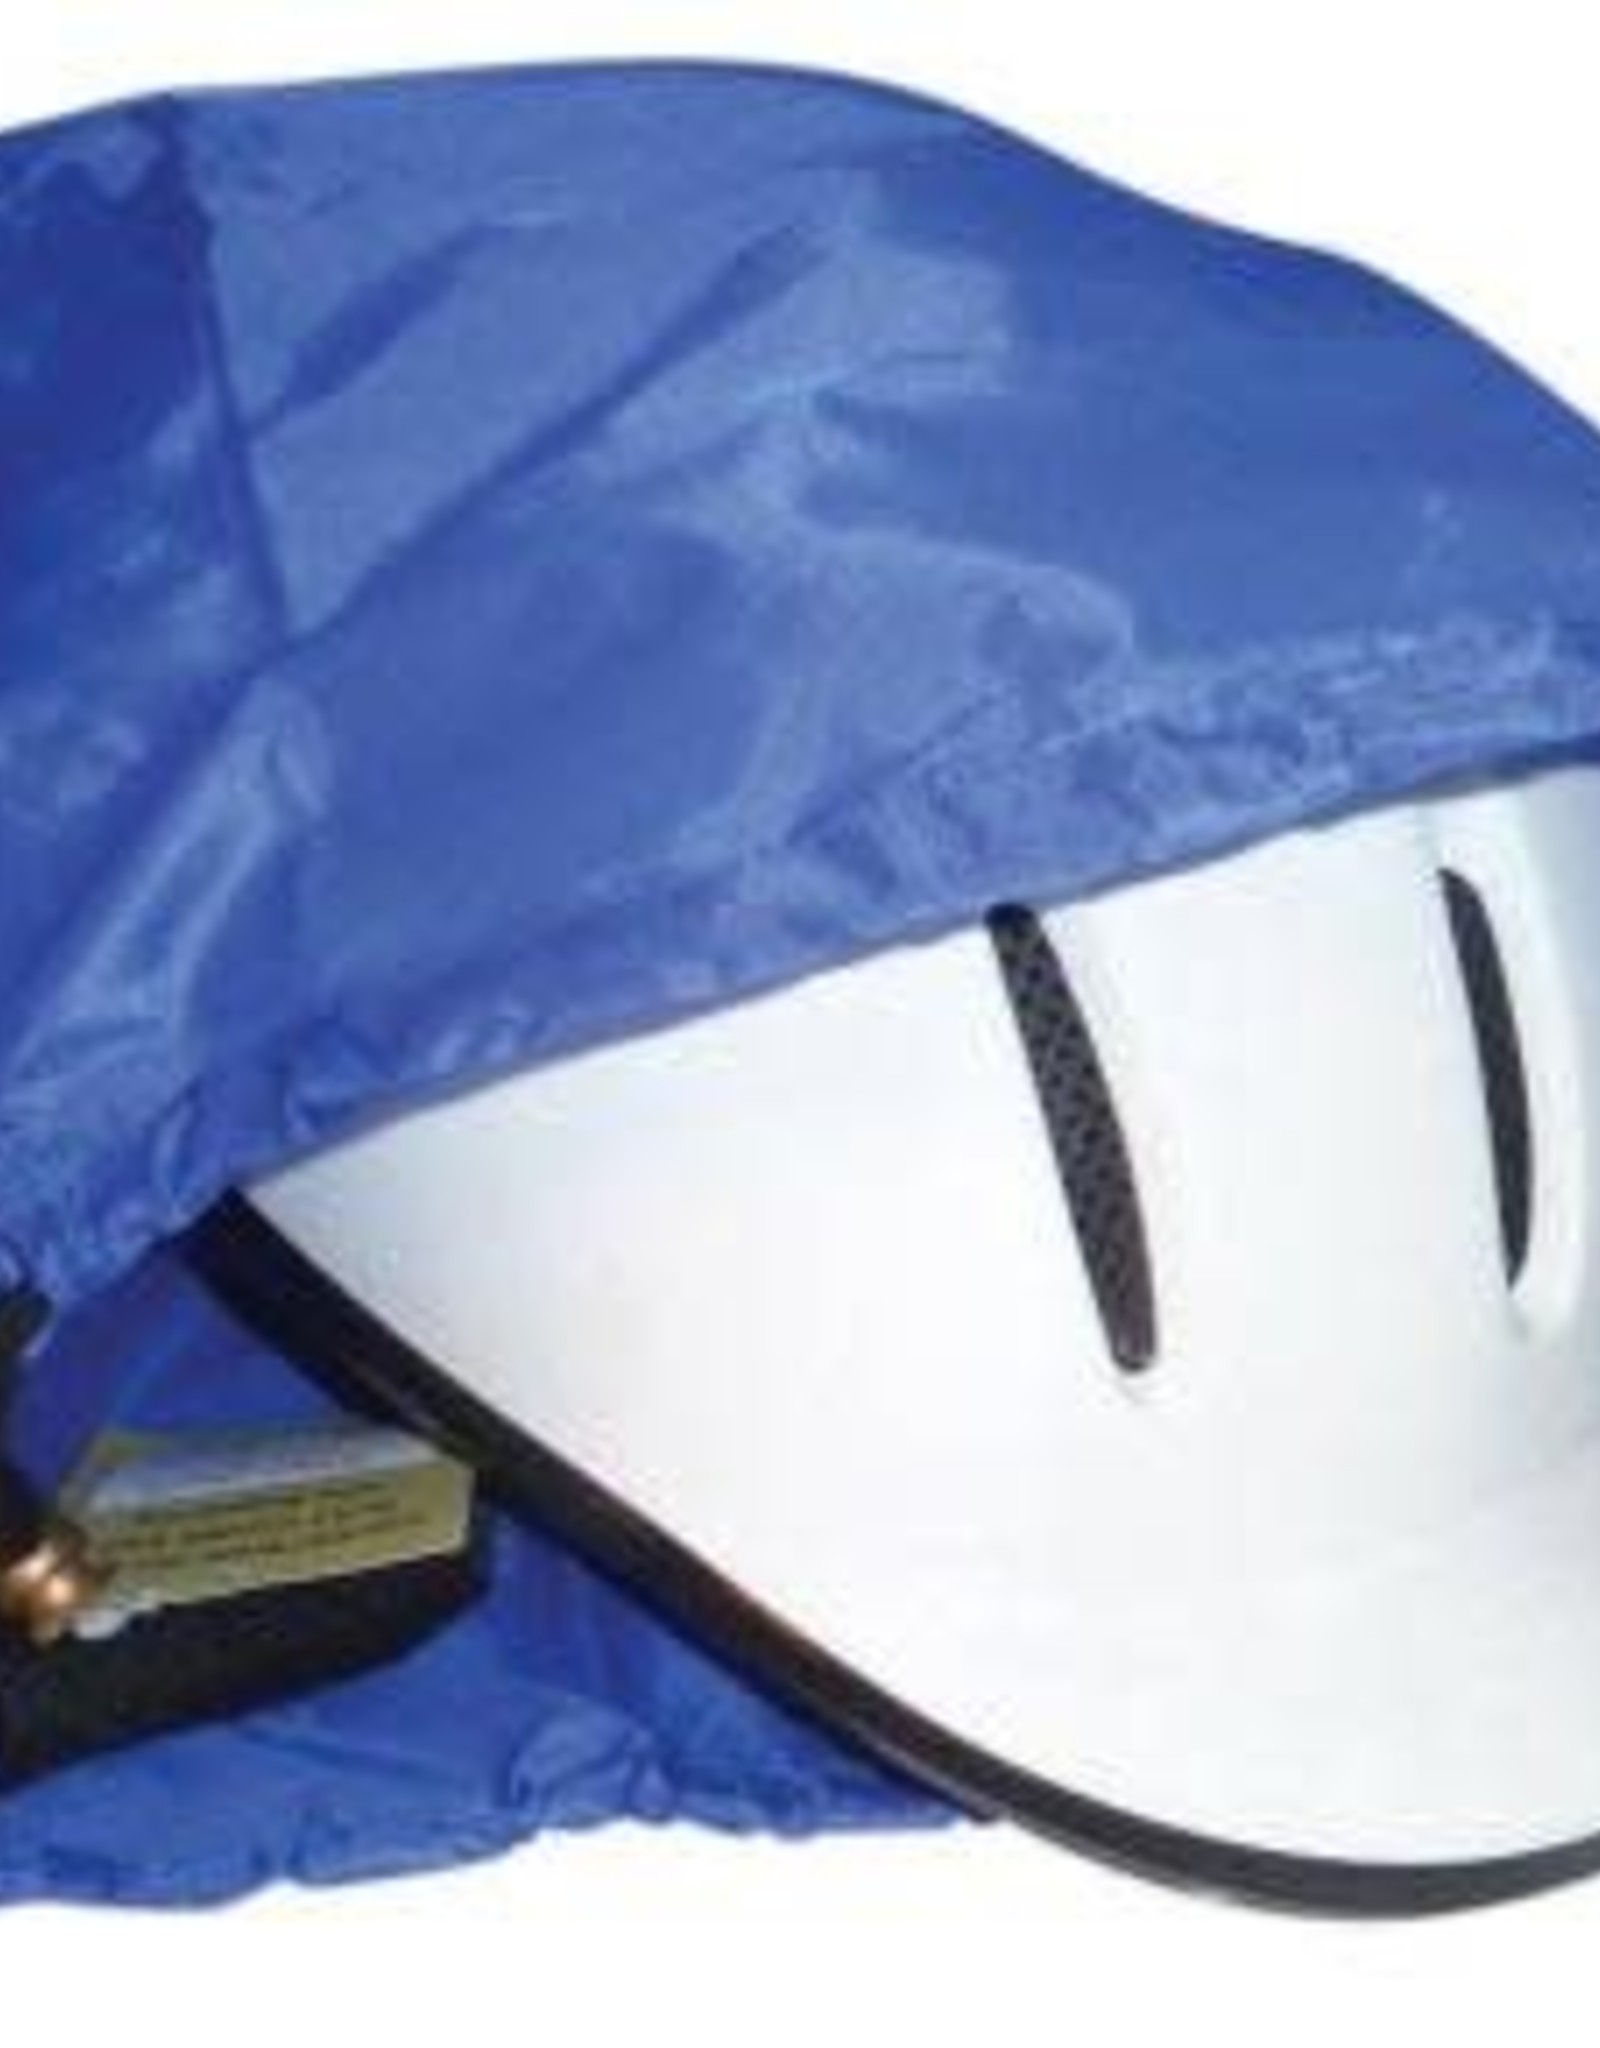 Helmet Dust Cover Bag with Drawstring - Blue